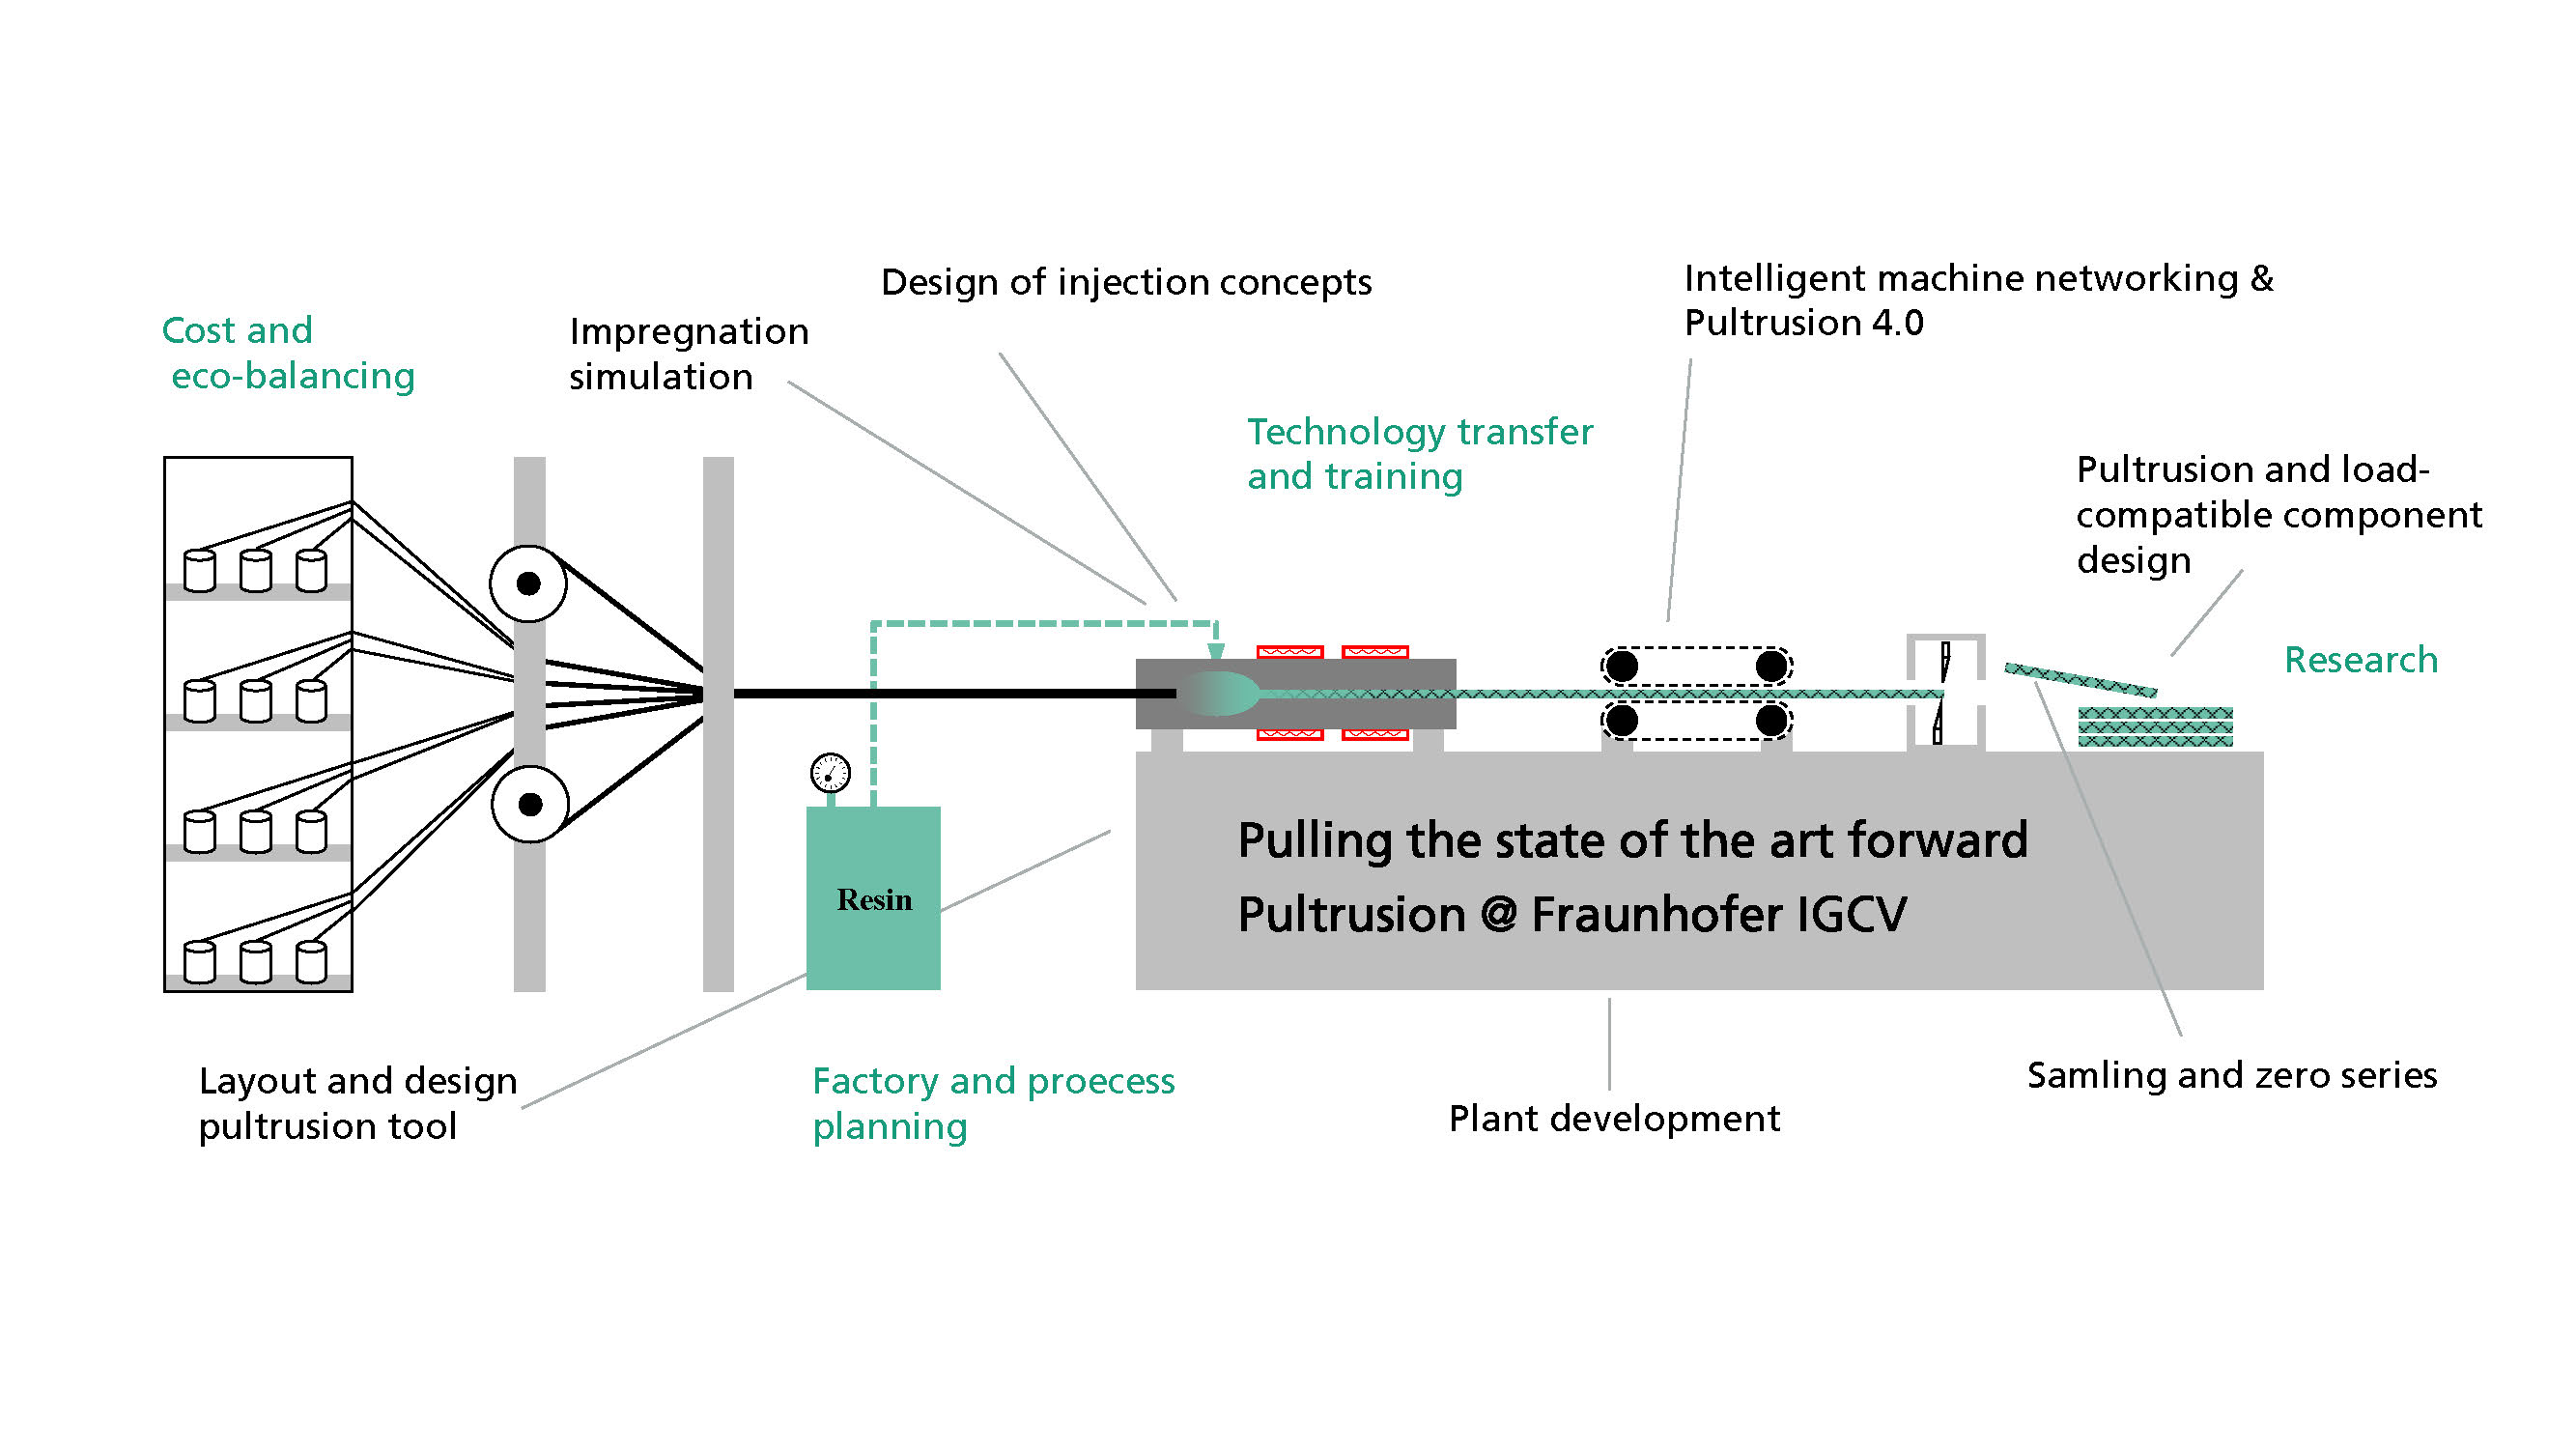 Pultrusion at Fraunhofer IGCV